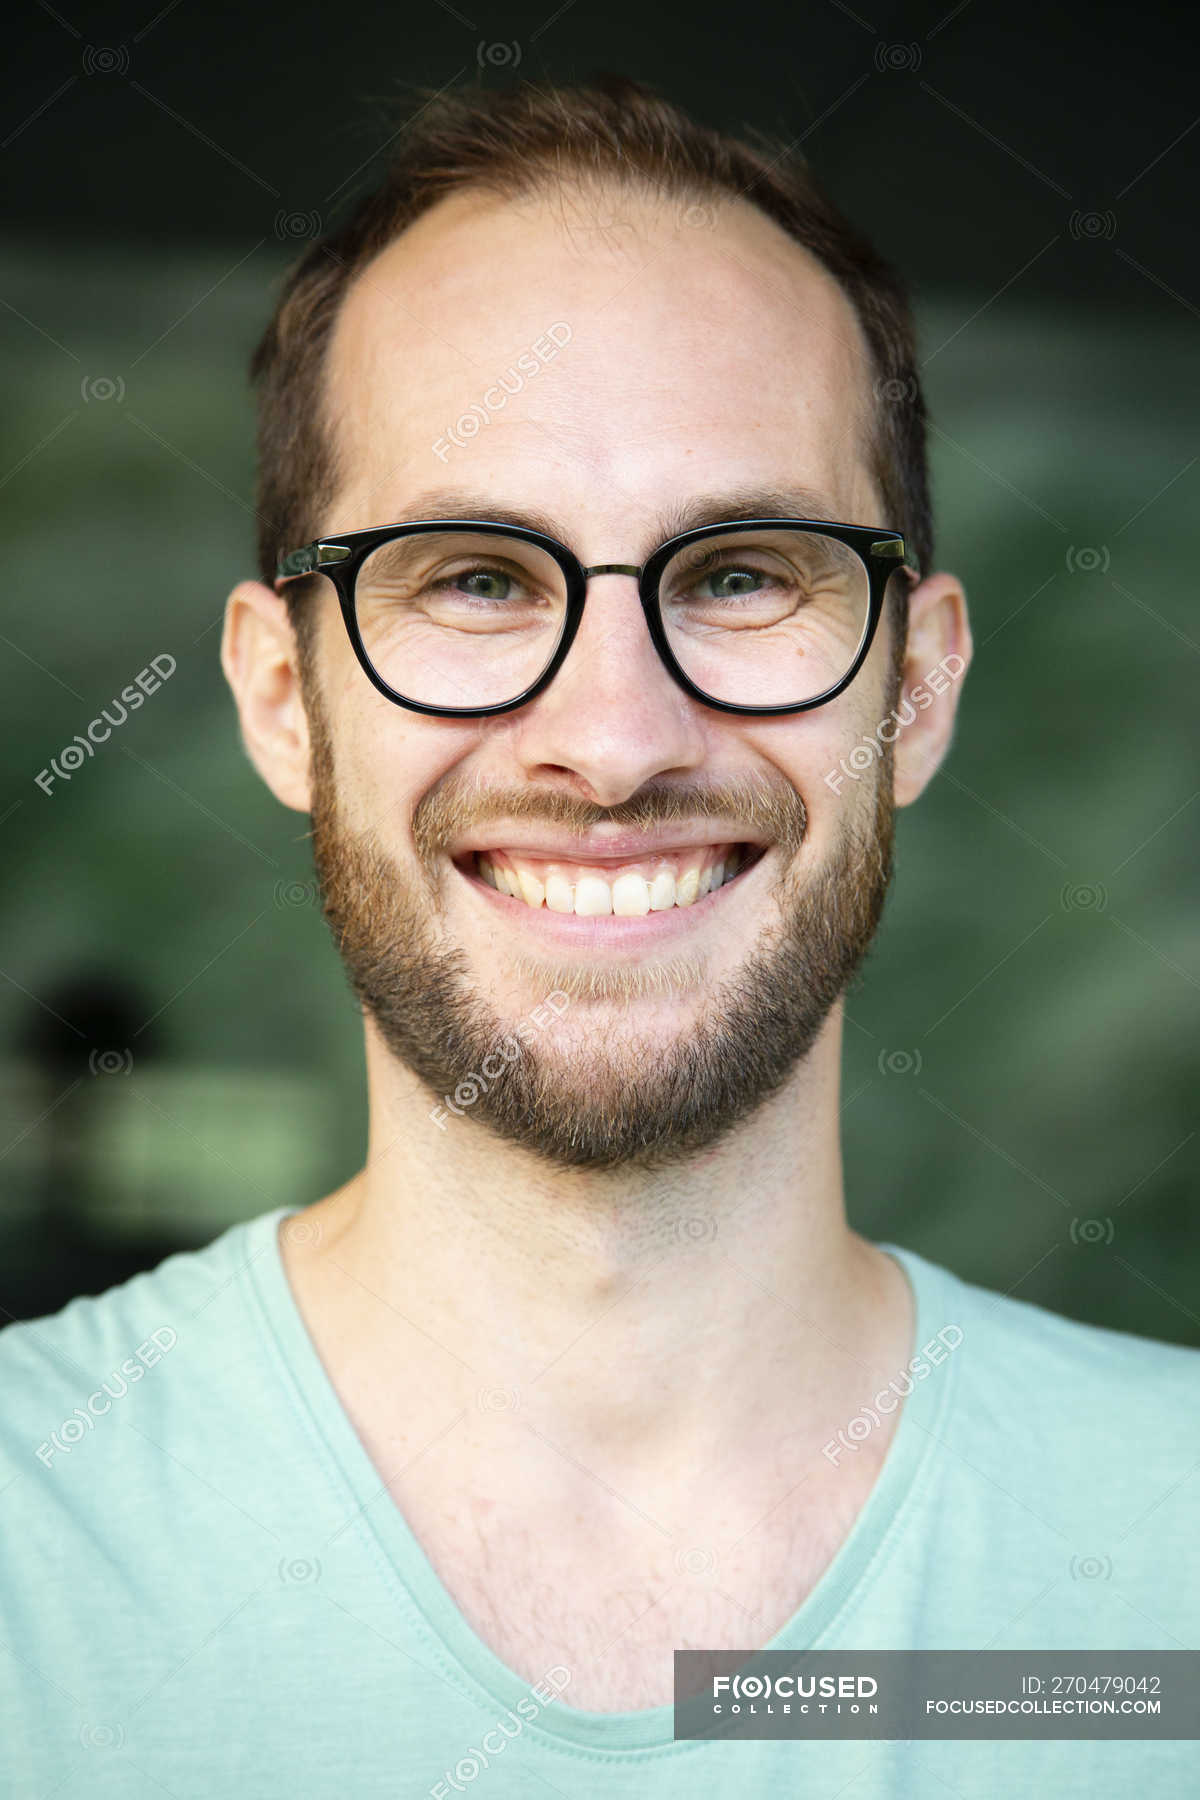 Portrait of happy man wearing glasses — joy, high spirits - Stock Photo |  #270479042